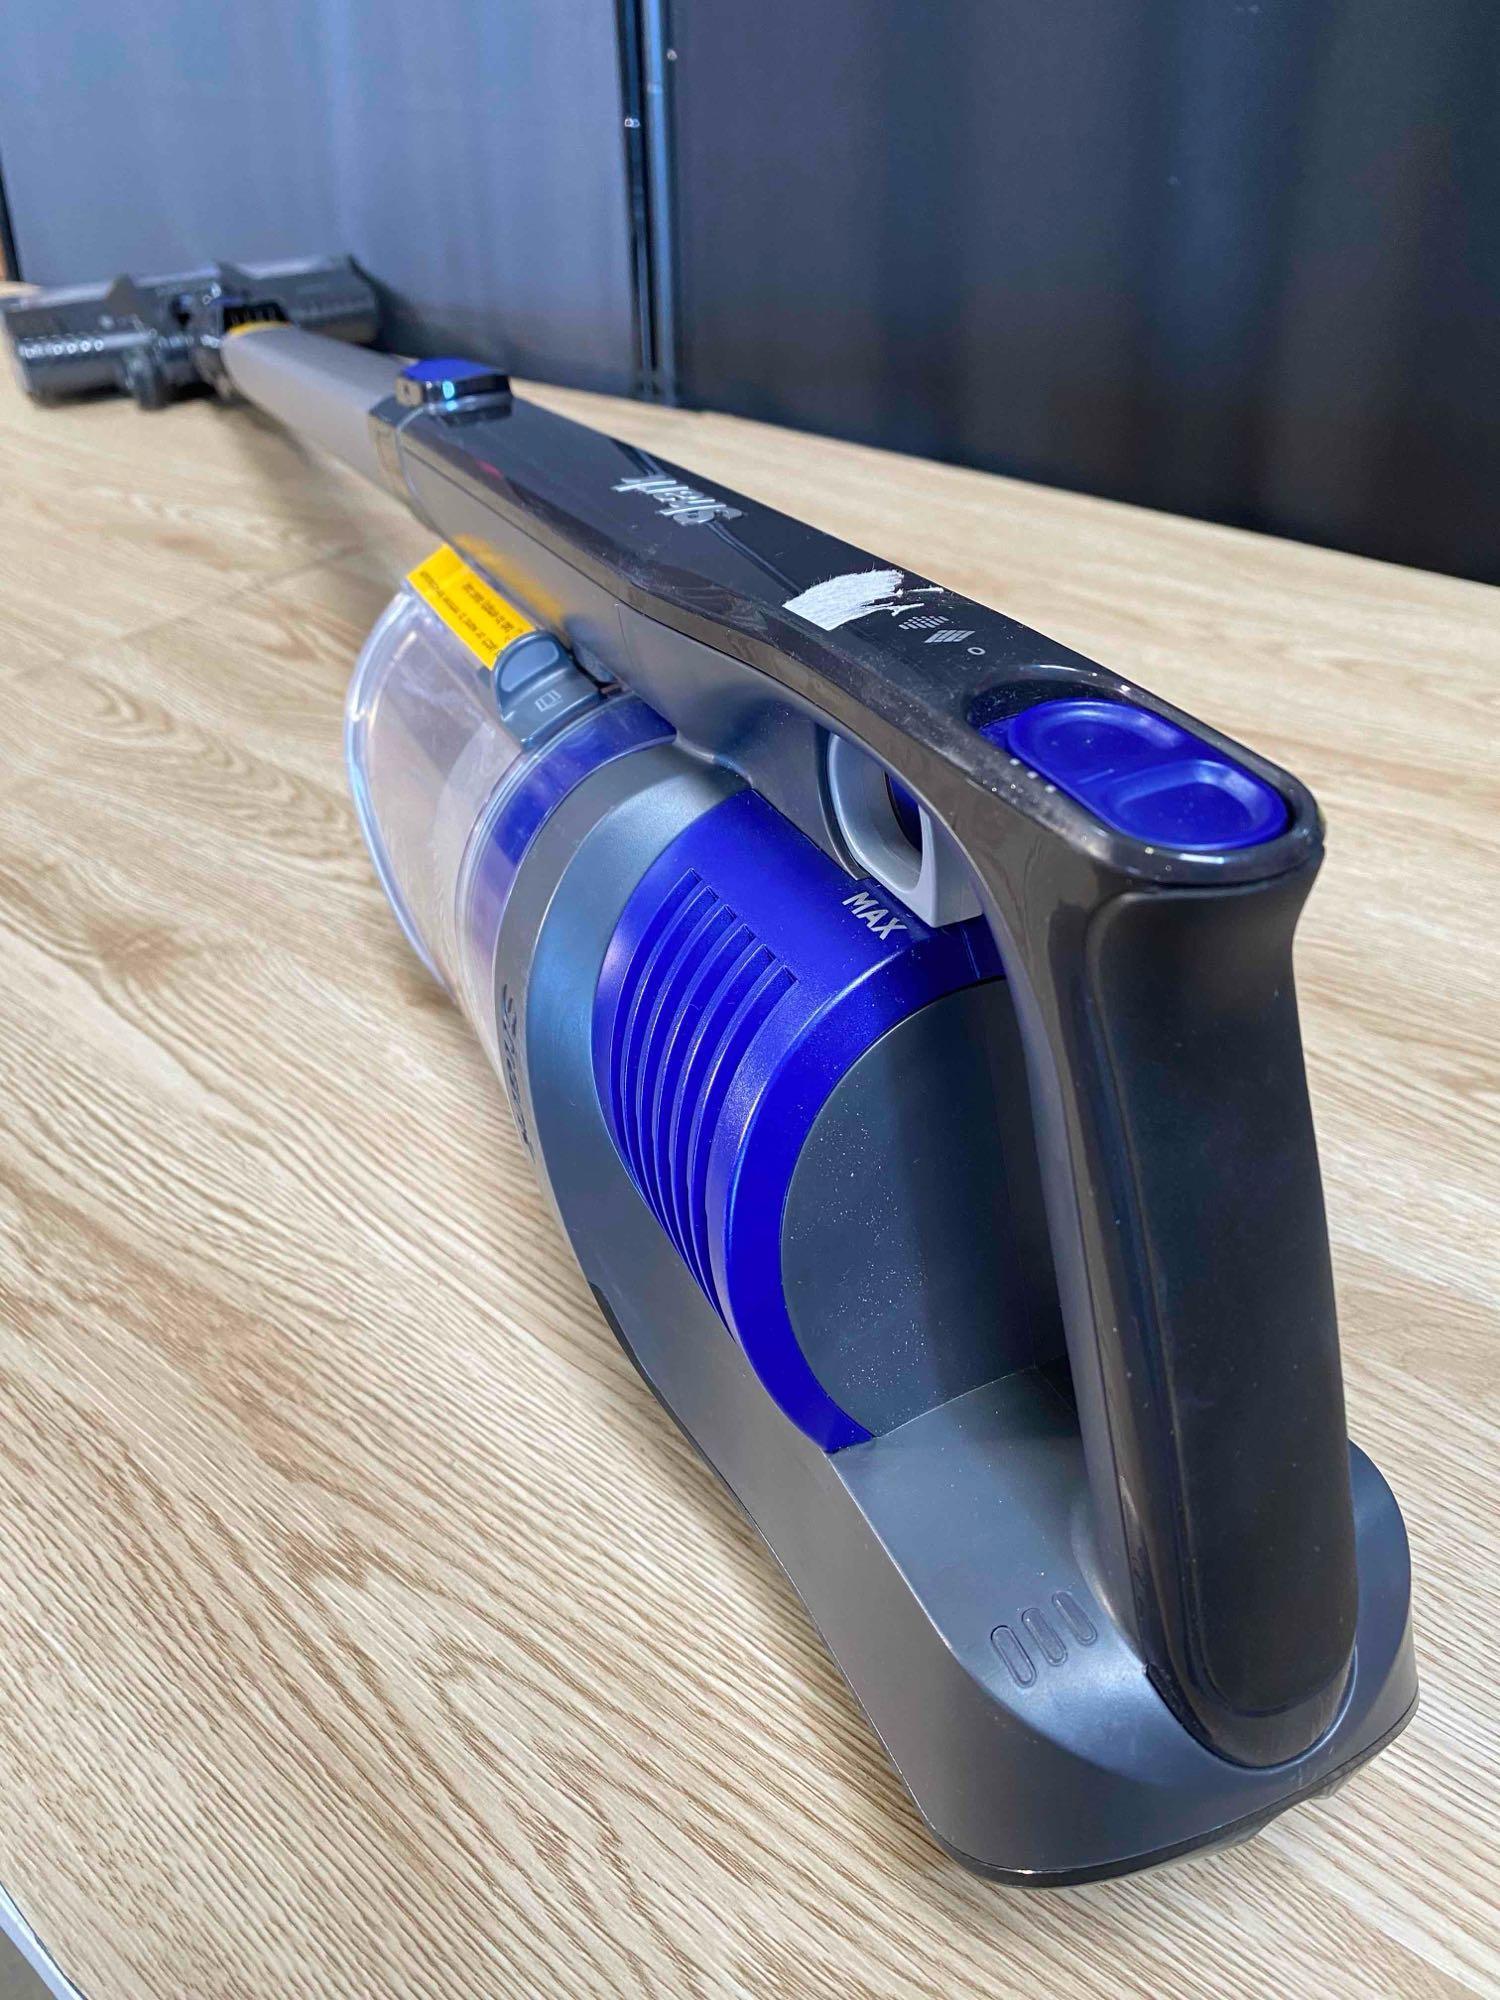 Shark - Pet Cordless Stick Vacuum